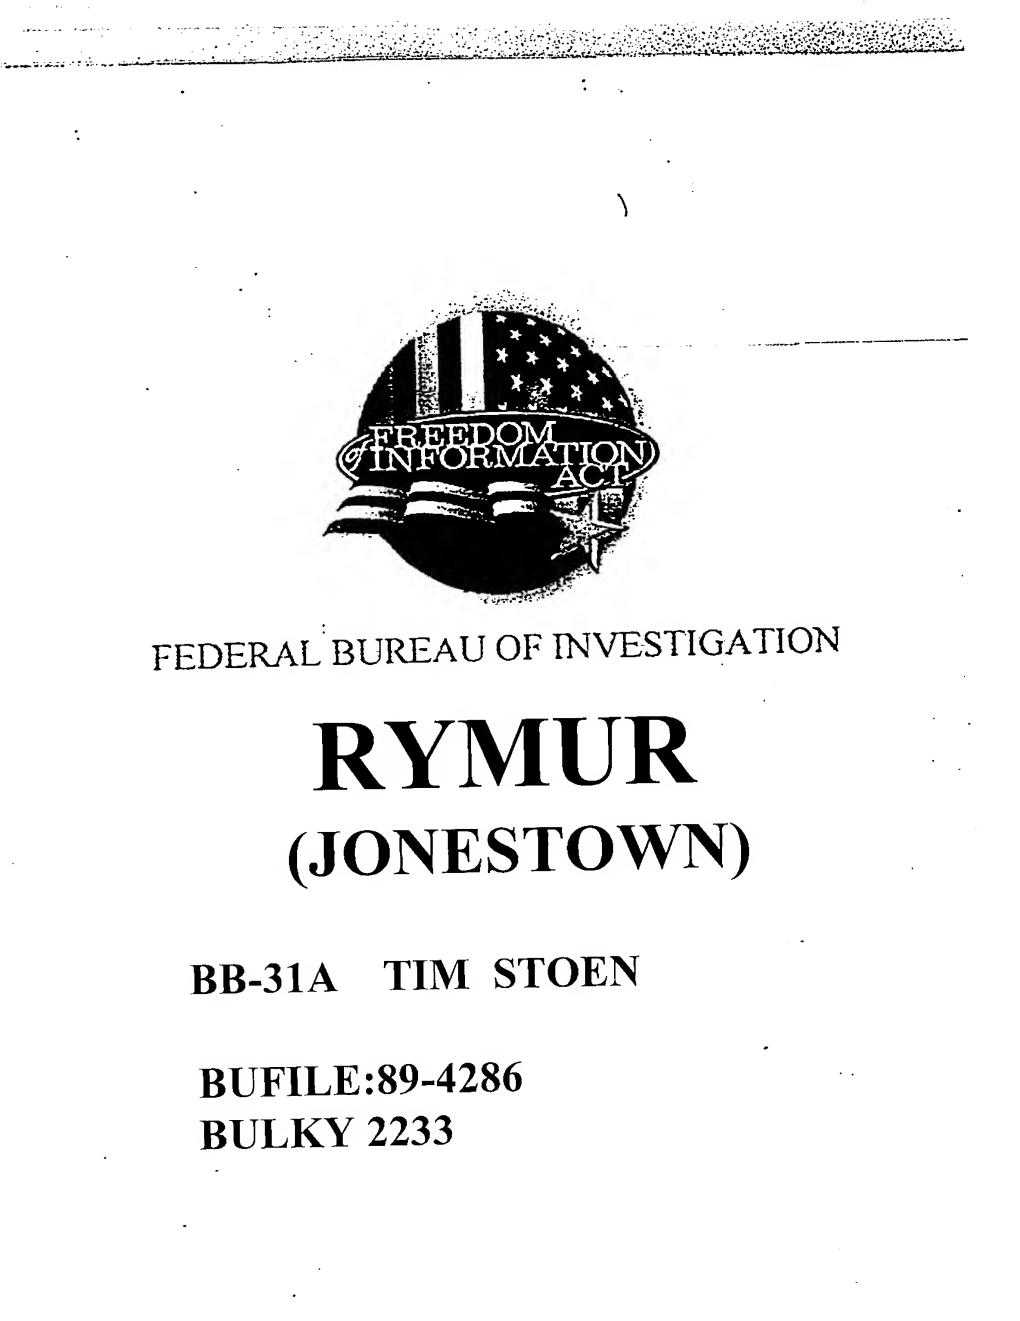 Jonestown FBI Files